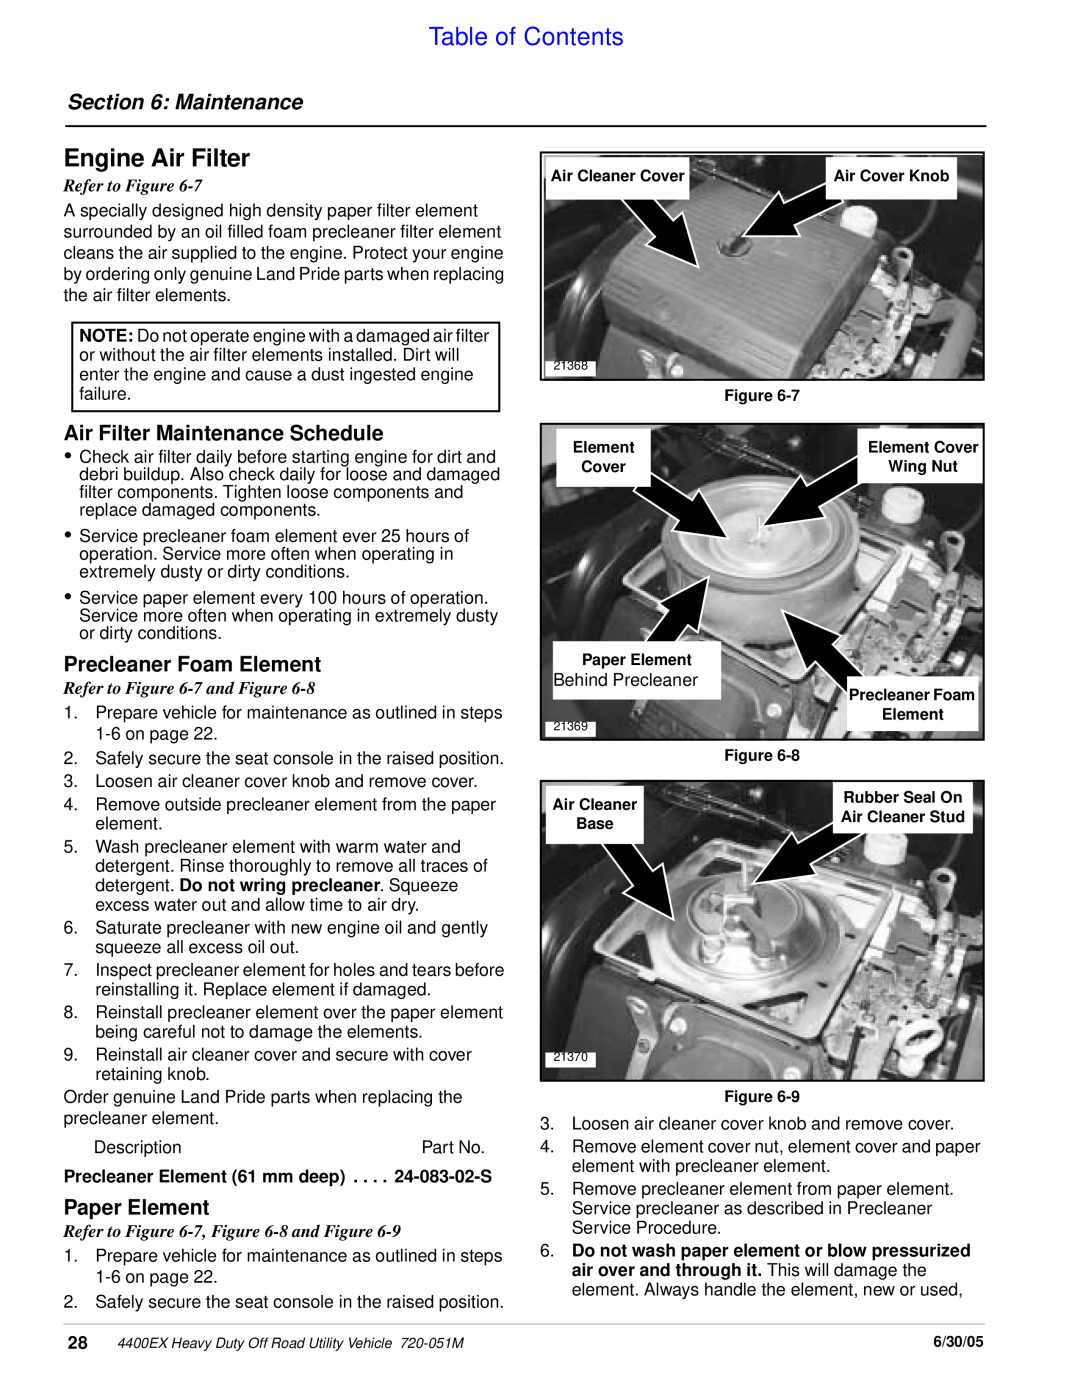 Land Pride 4400ex manual Engine Air Filter, Air Filter Maintenance Schedule, Precleaner Foam Element, Paper Element 